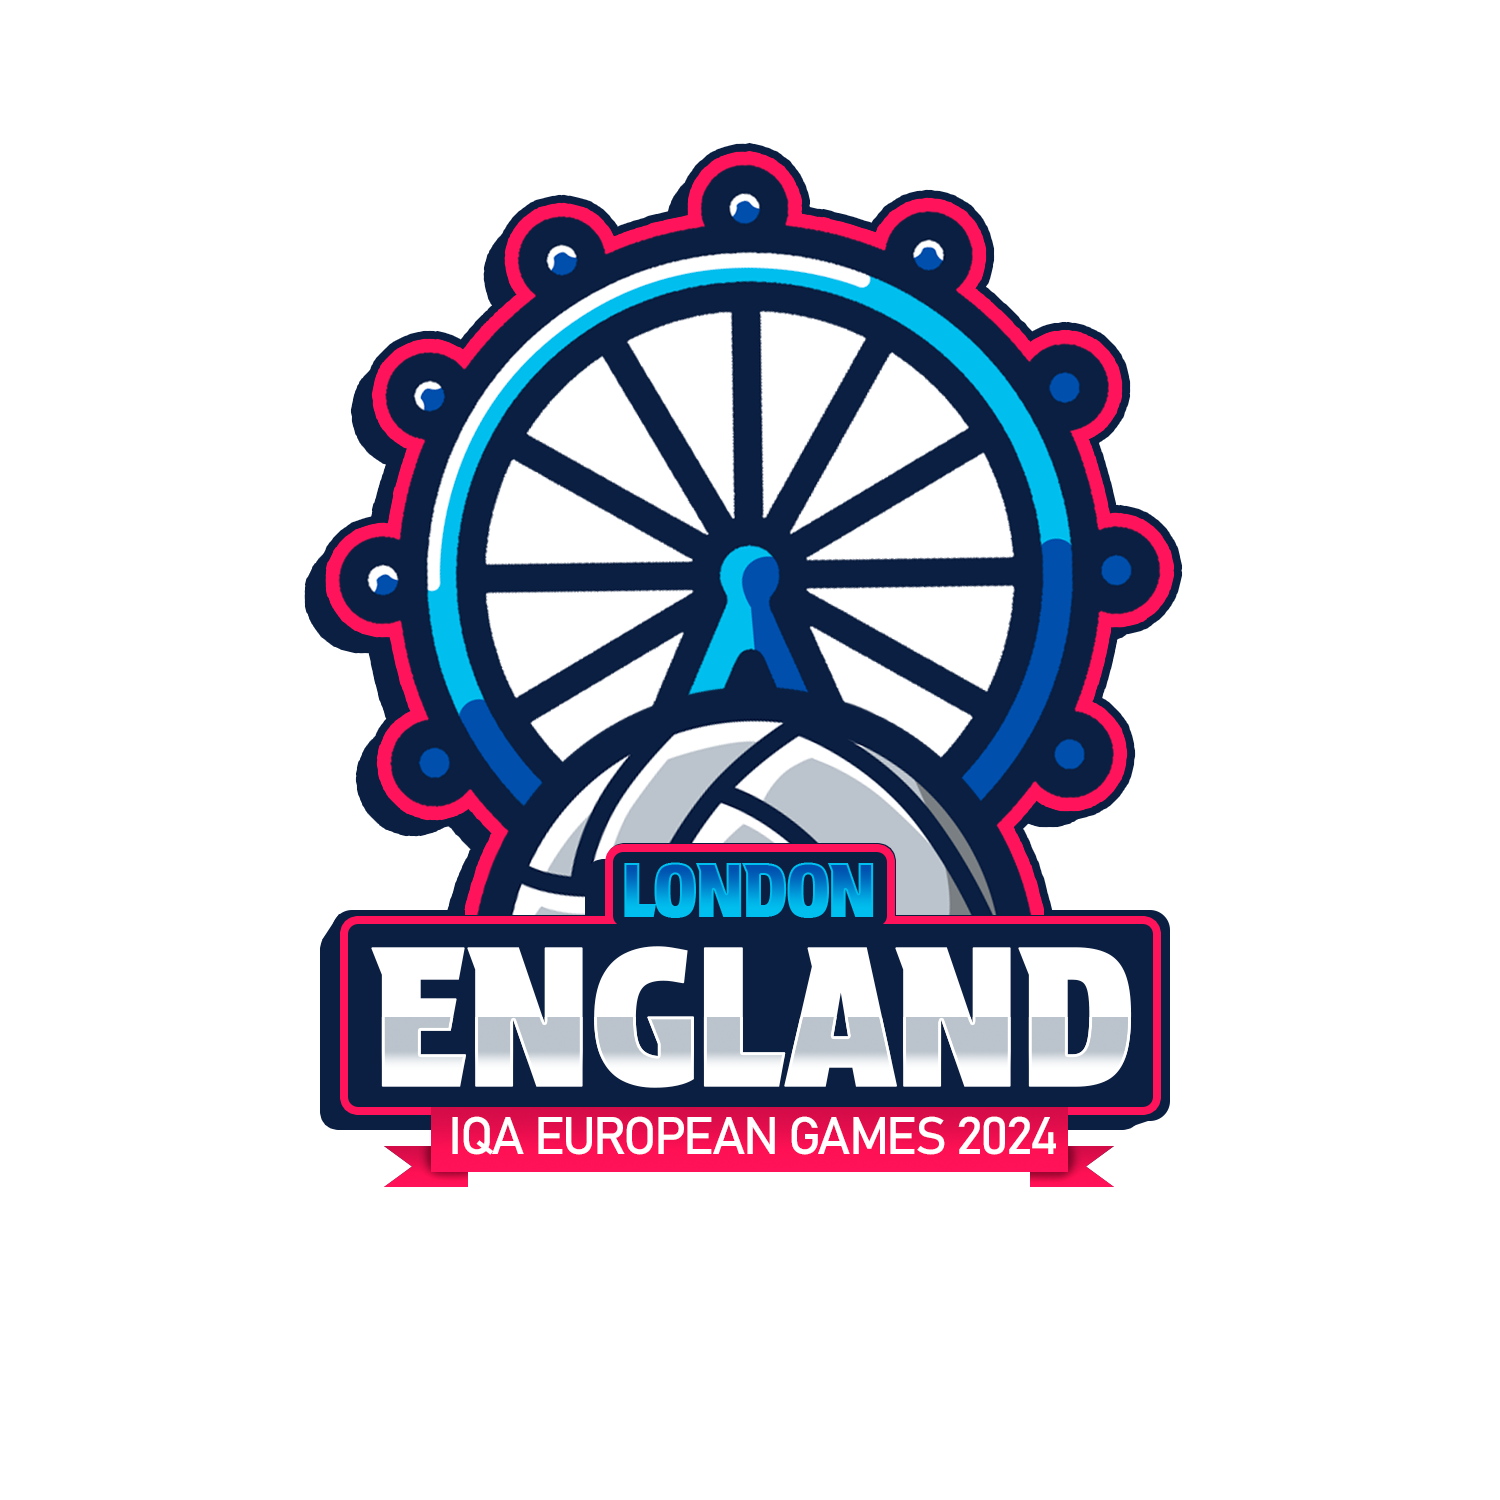 Quadball European Games 2024 logo